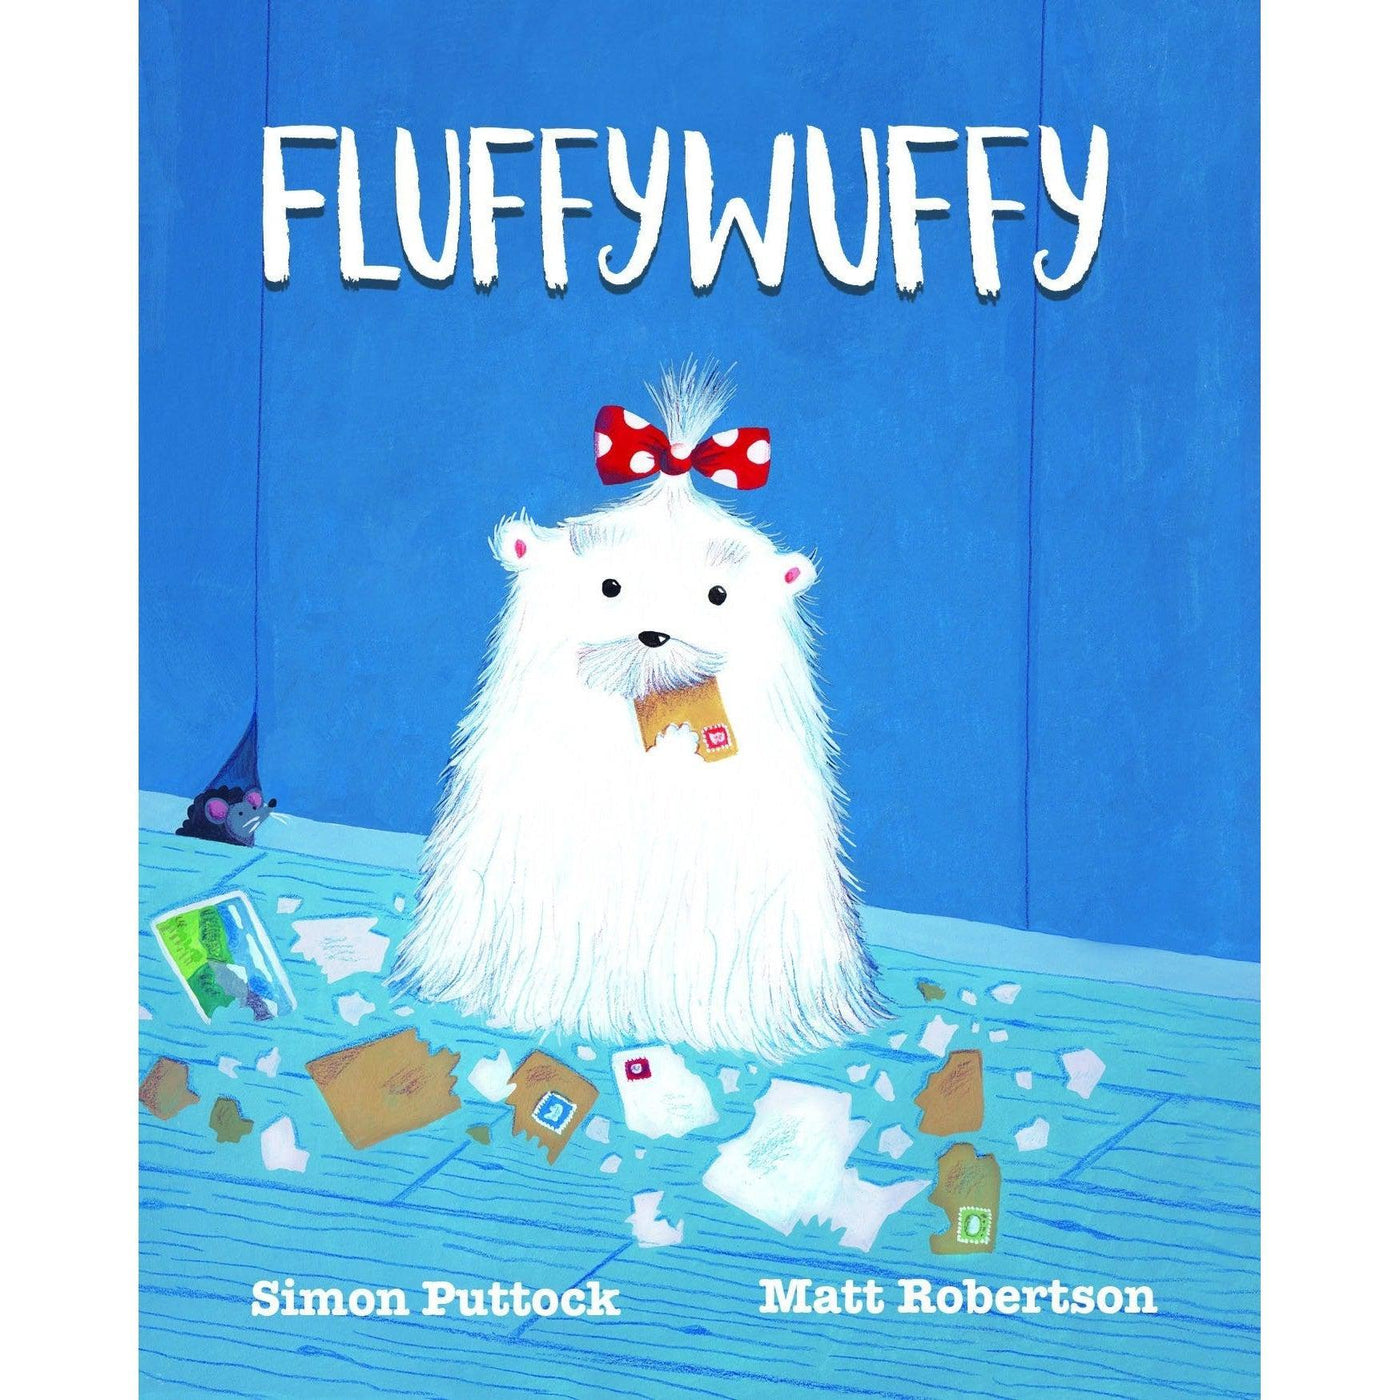 Fluffywuffy -Simon Puttock & Matt Robertson